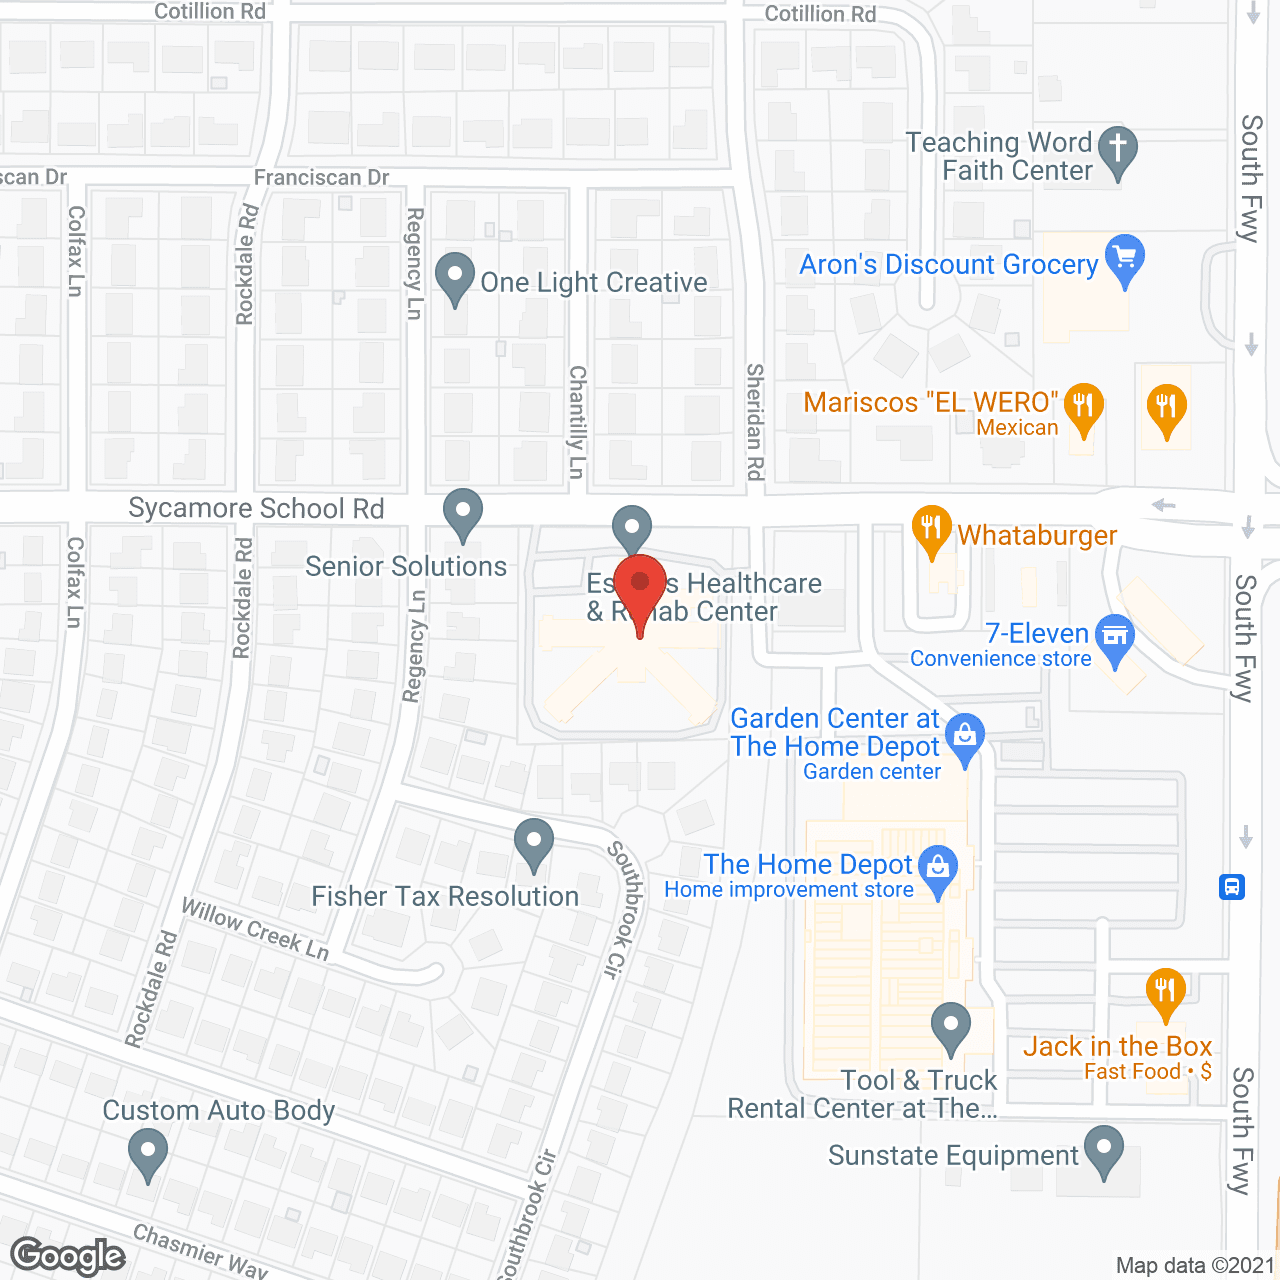 Estates Healthcare Center in google map